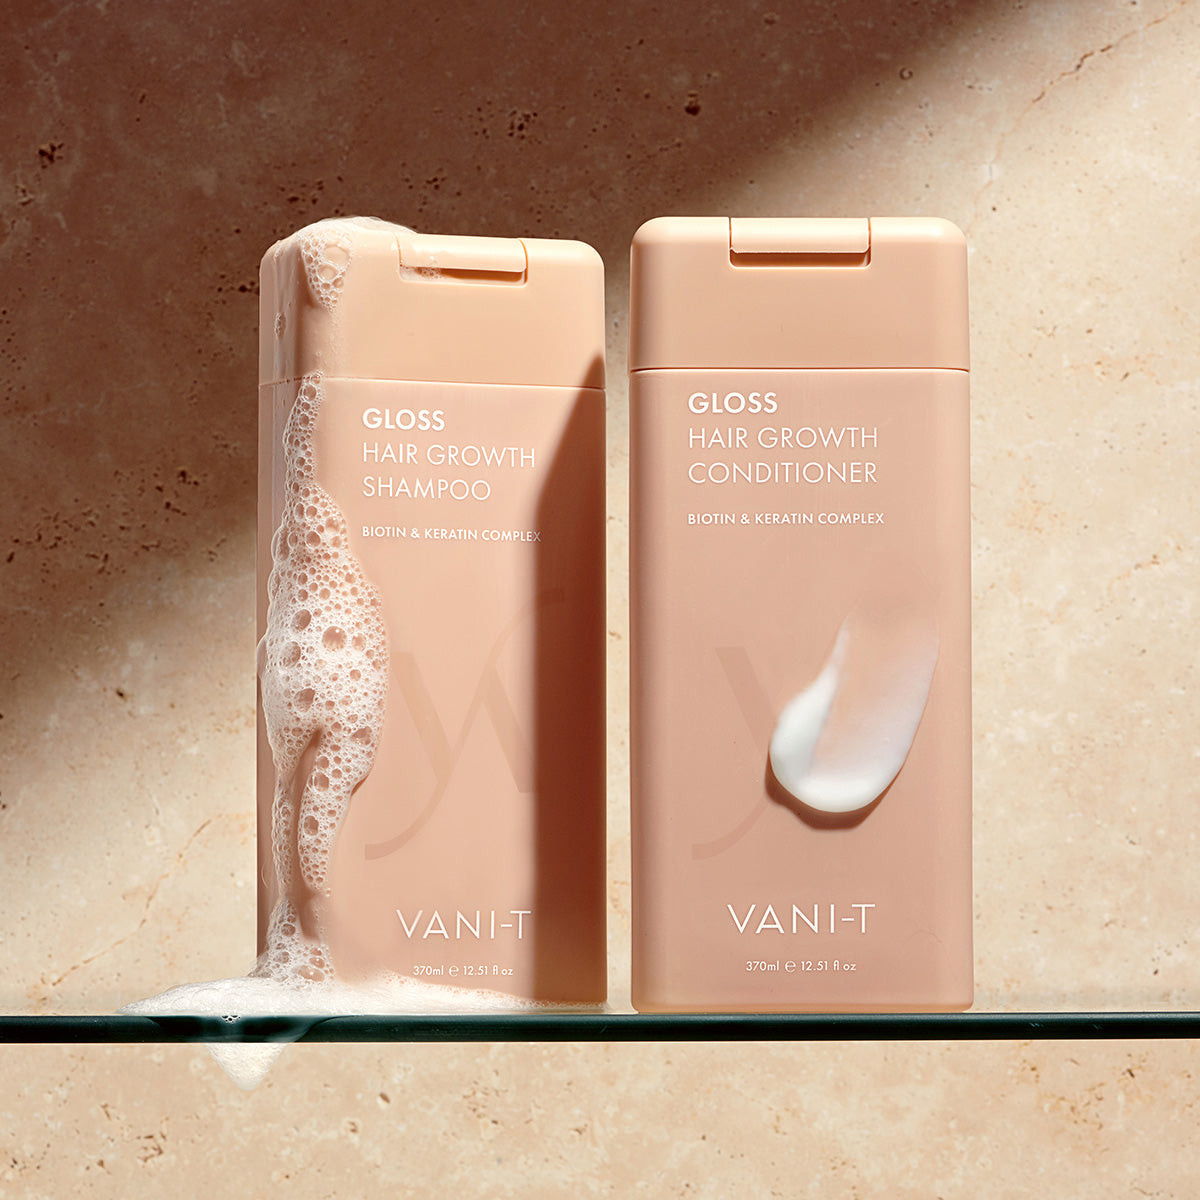 VANI-T Gloss Hair Growth Shampoo & Conditioner Duo 375ml 4